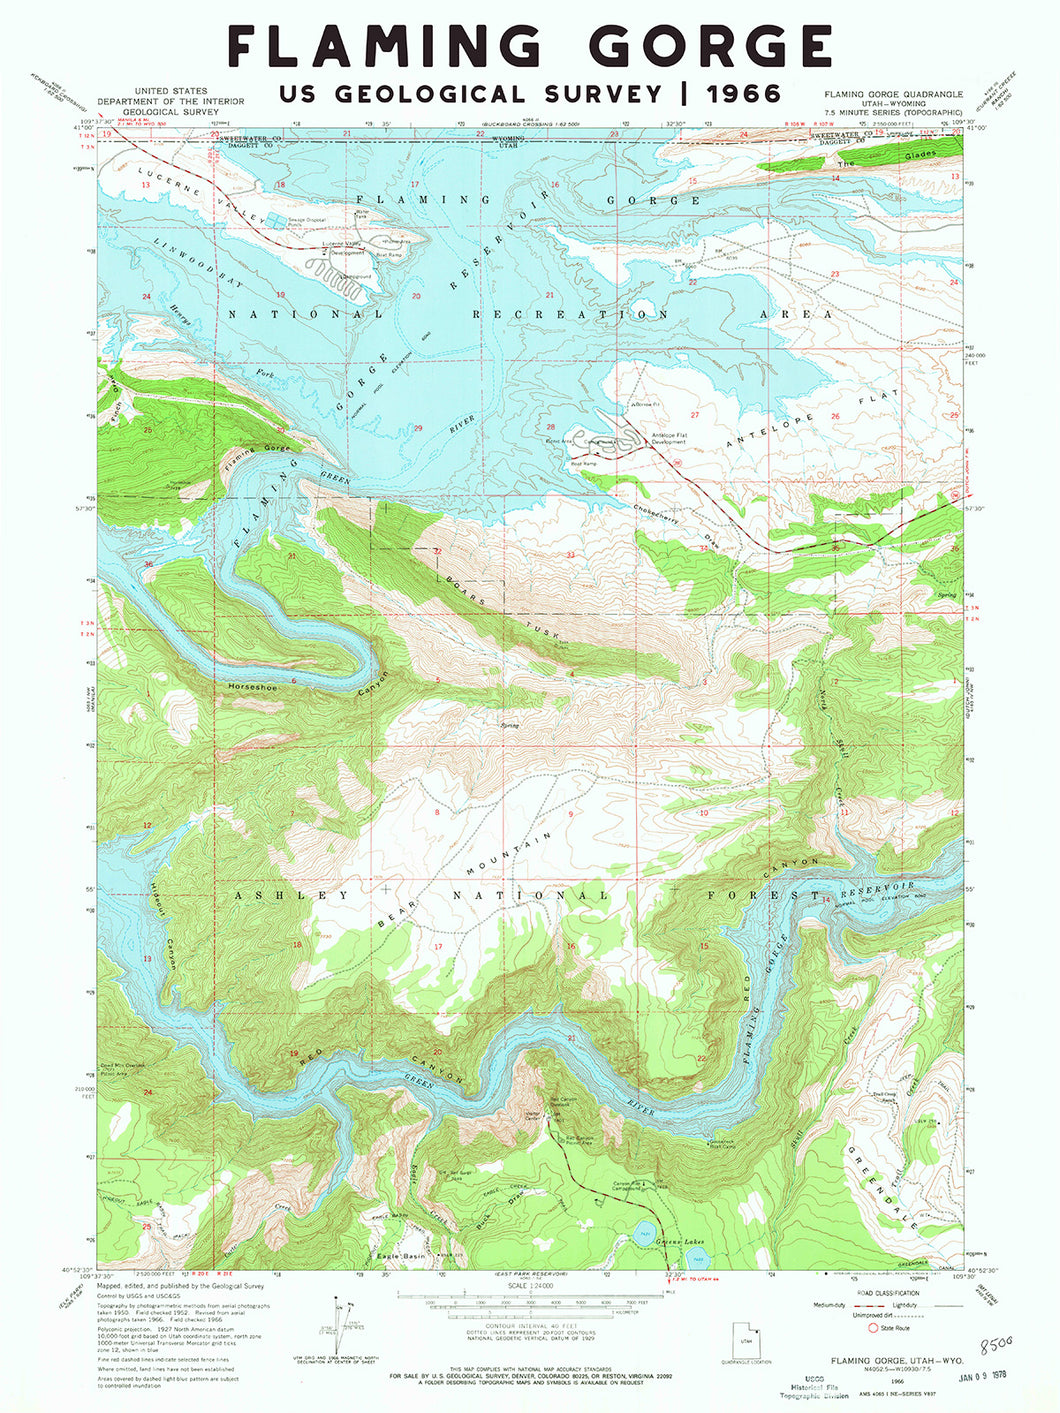 Flaming Gorge Utah USGS Vintage Map 1966 Poster